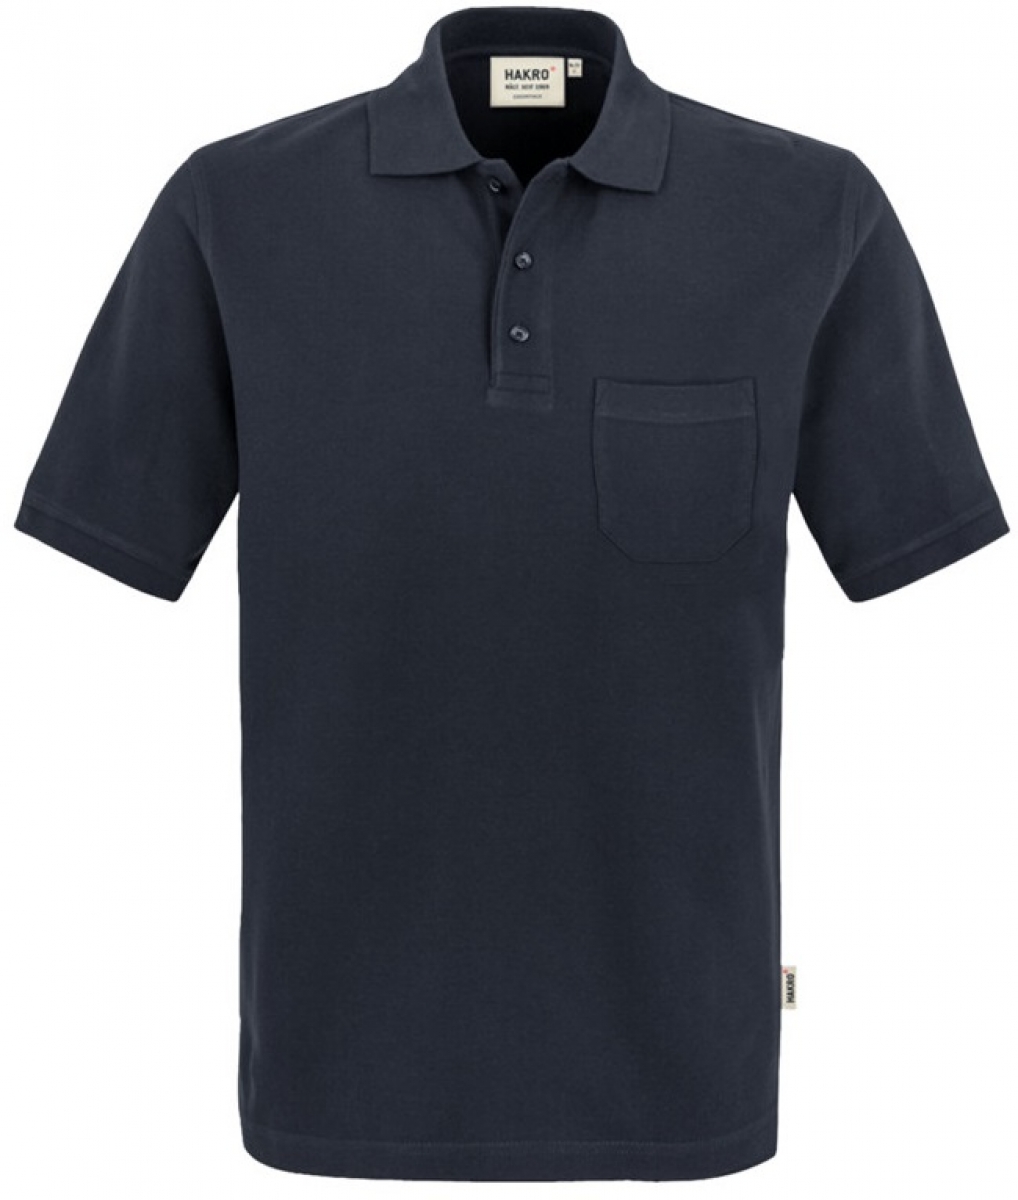 HAKRO-Worker-Shirts, Pocket-Poloshirt Top, tinte